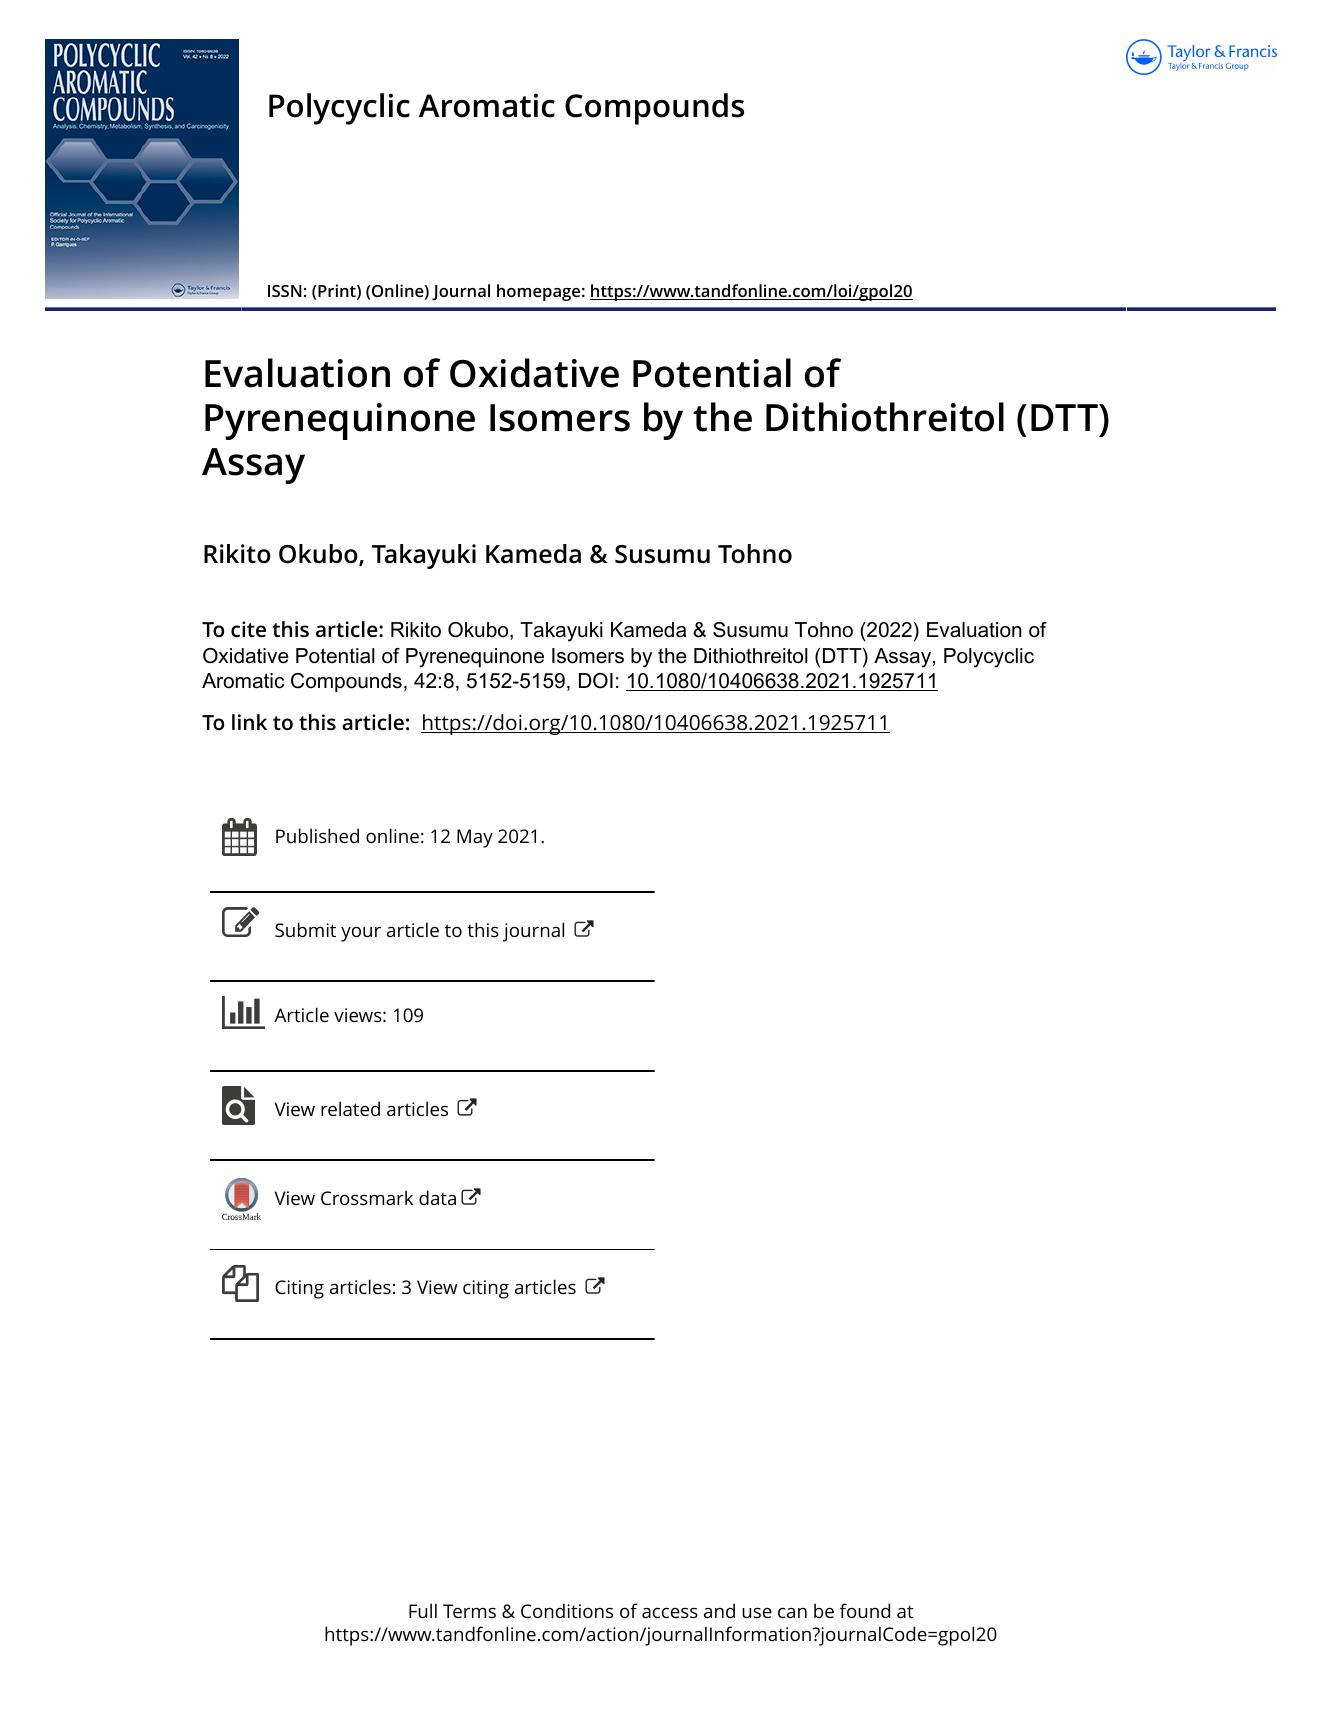 Evaluation of Oxidative Potential of Pyrenequinone Isomers by the Dithiothreitol (DTT) Assay by Okubo Rikito & Kameda Takayuki & Tohno Susumu